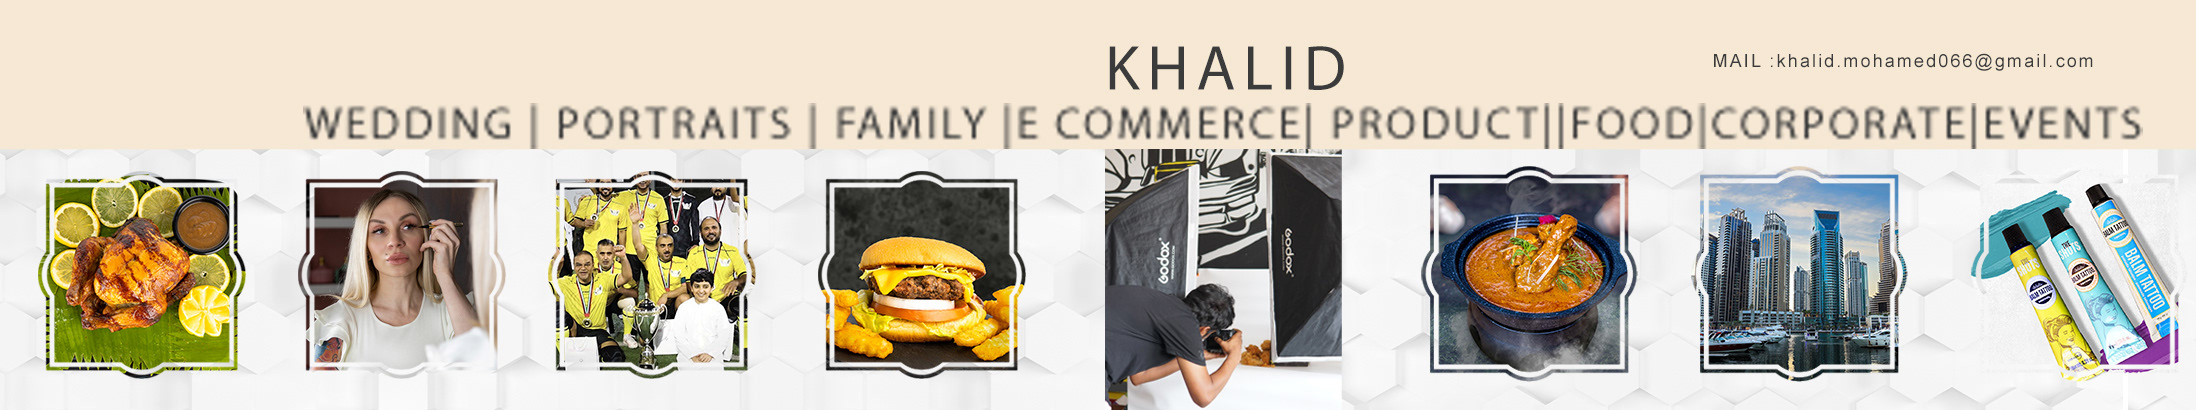 Khalid Mohamed's profile banner